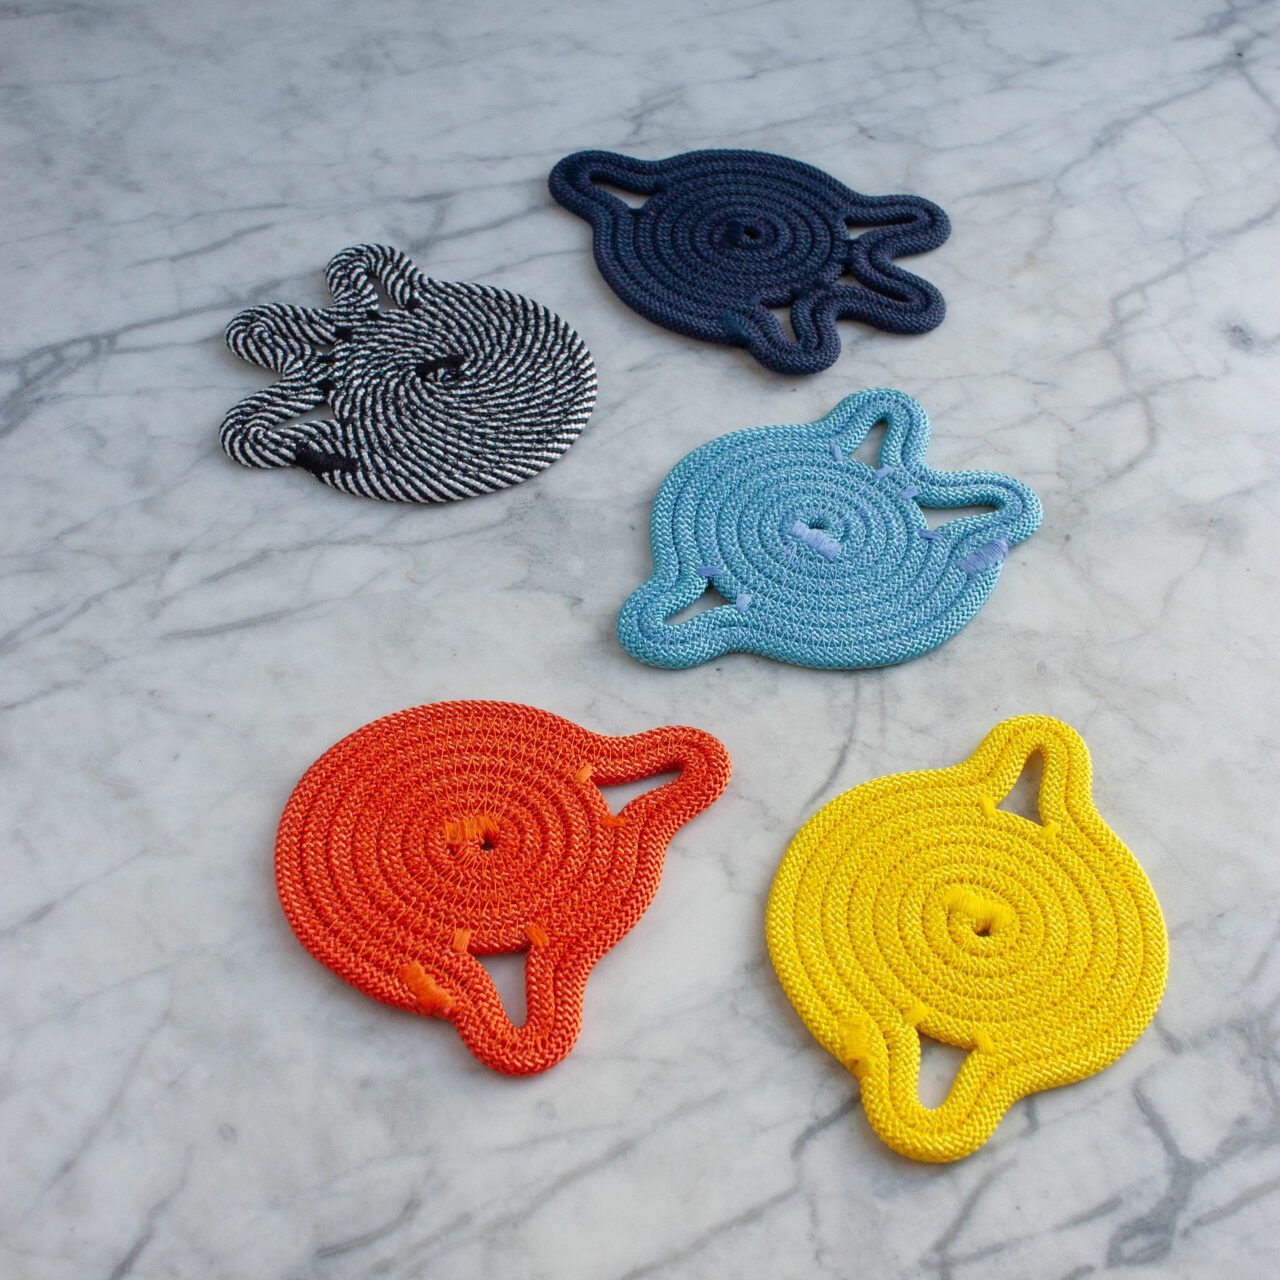 fruitsuper design / Woven Rope Coasters